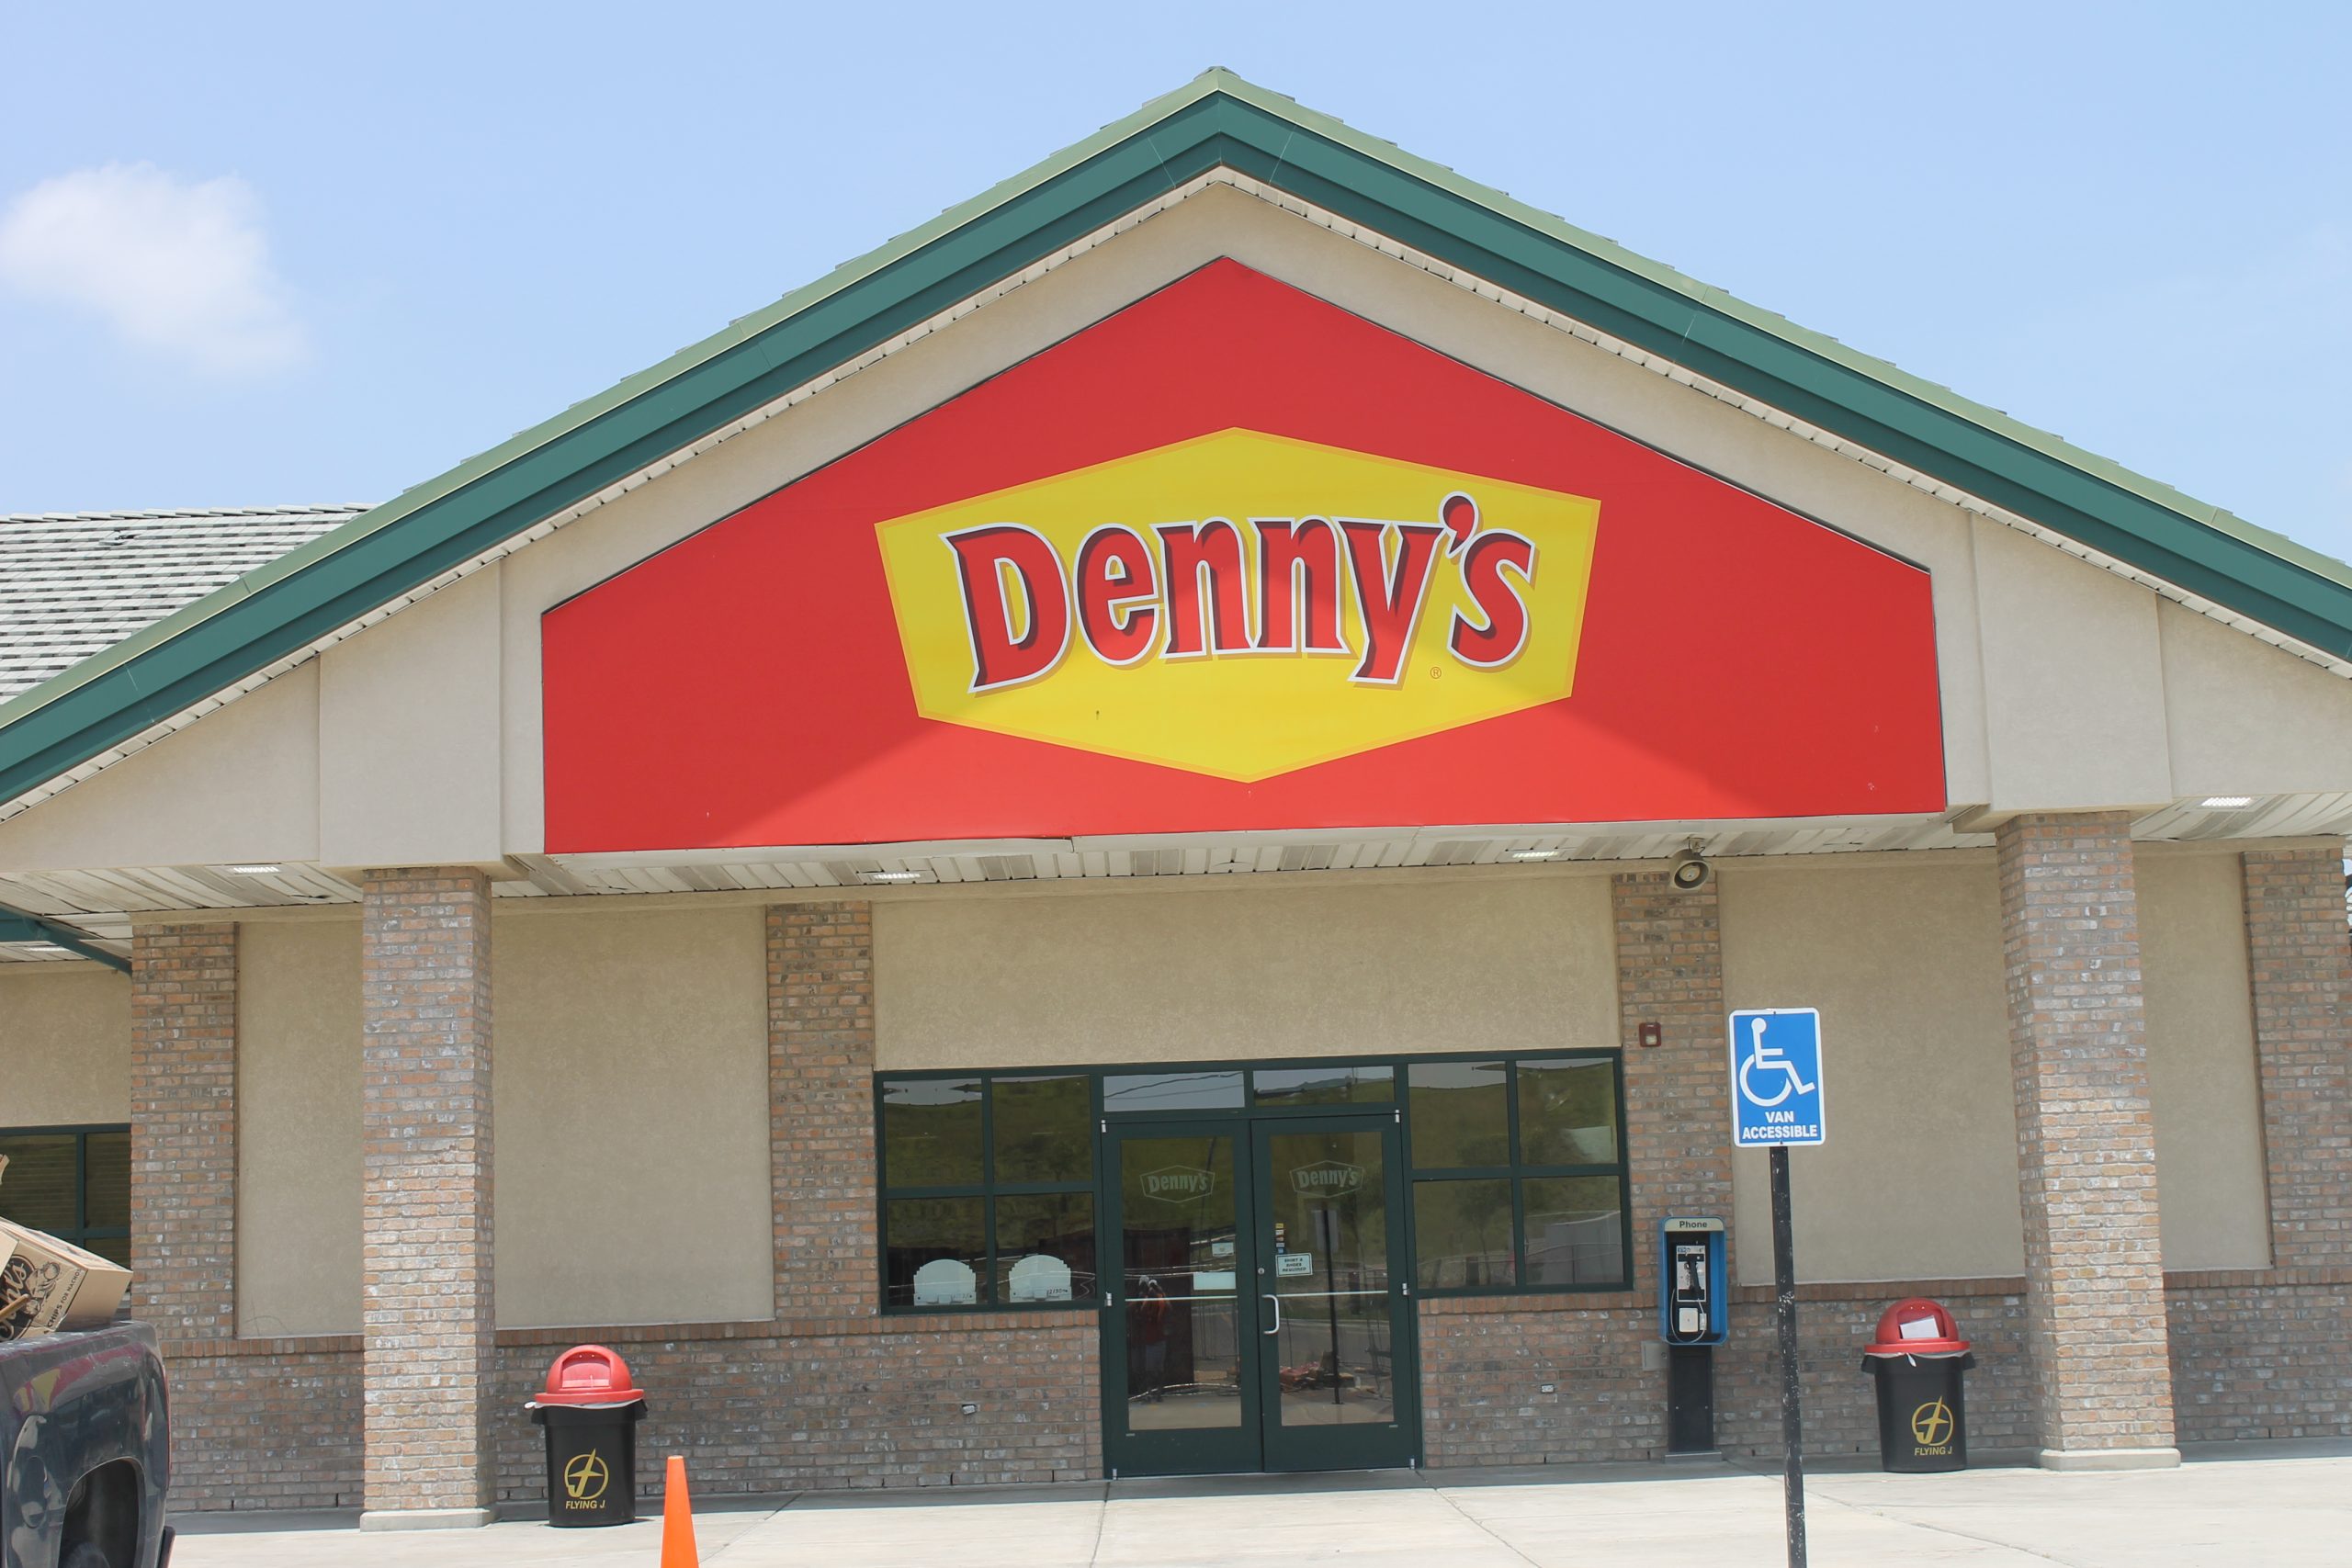 Denny’s #9551, S Mooney Blvd EBT Restaurant